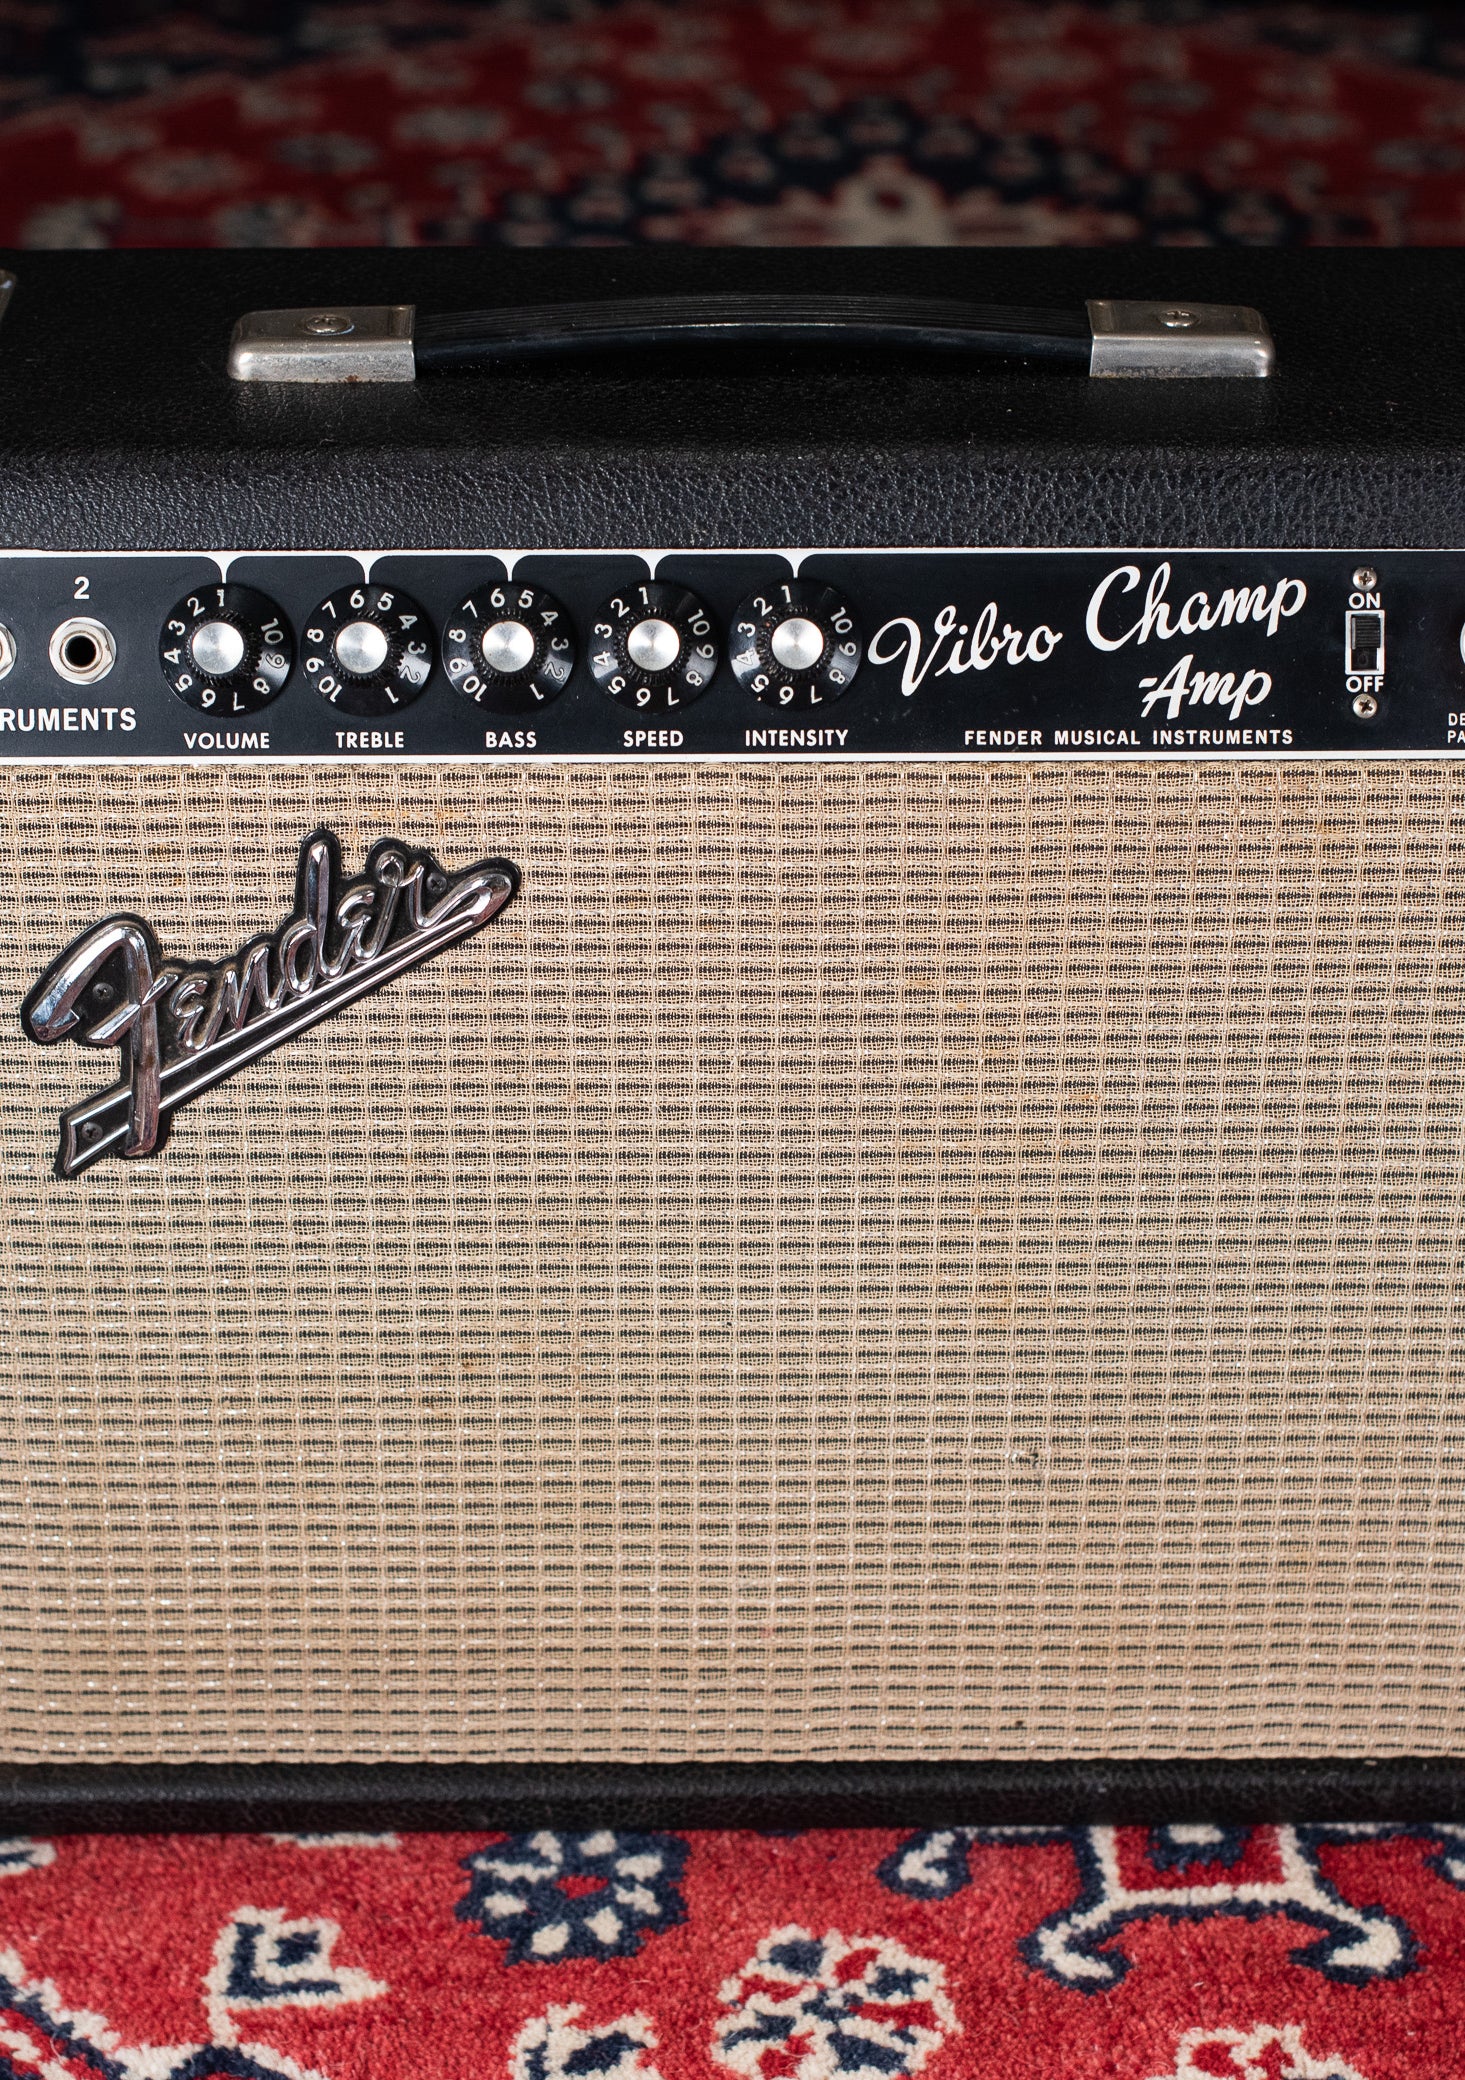 Vintage 1967 Fender Vibro Champ guitar amplifier